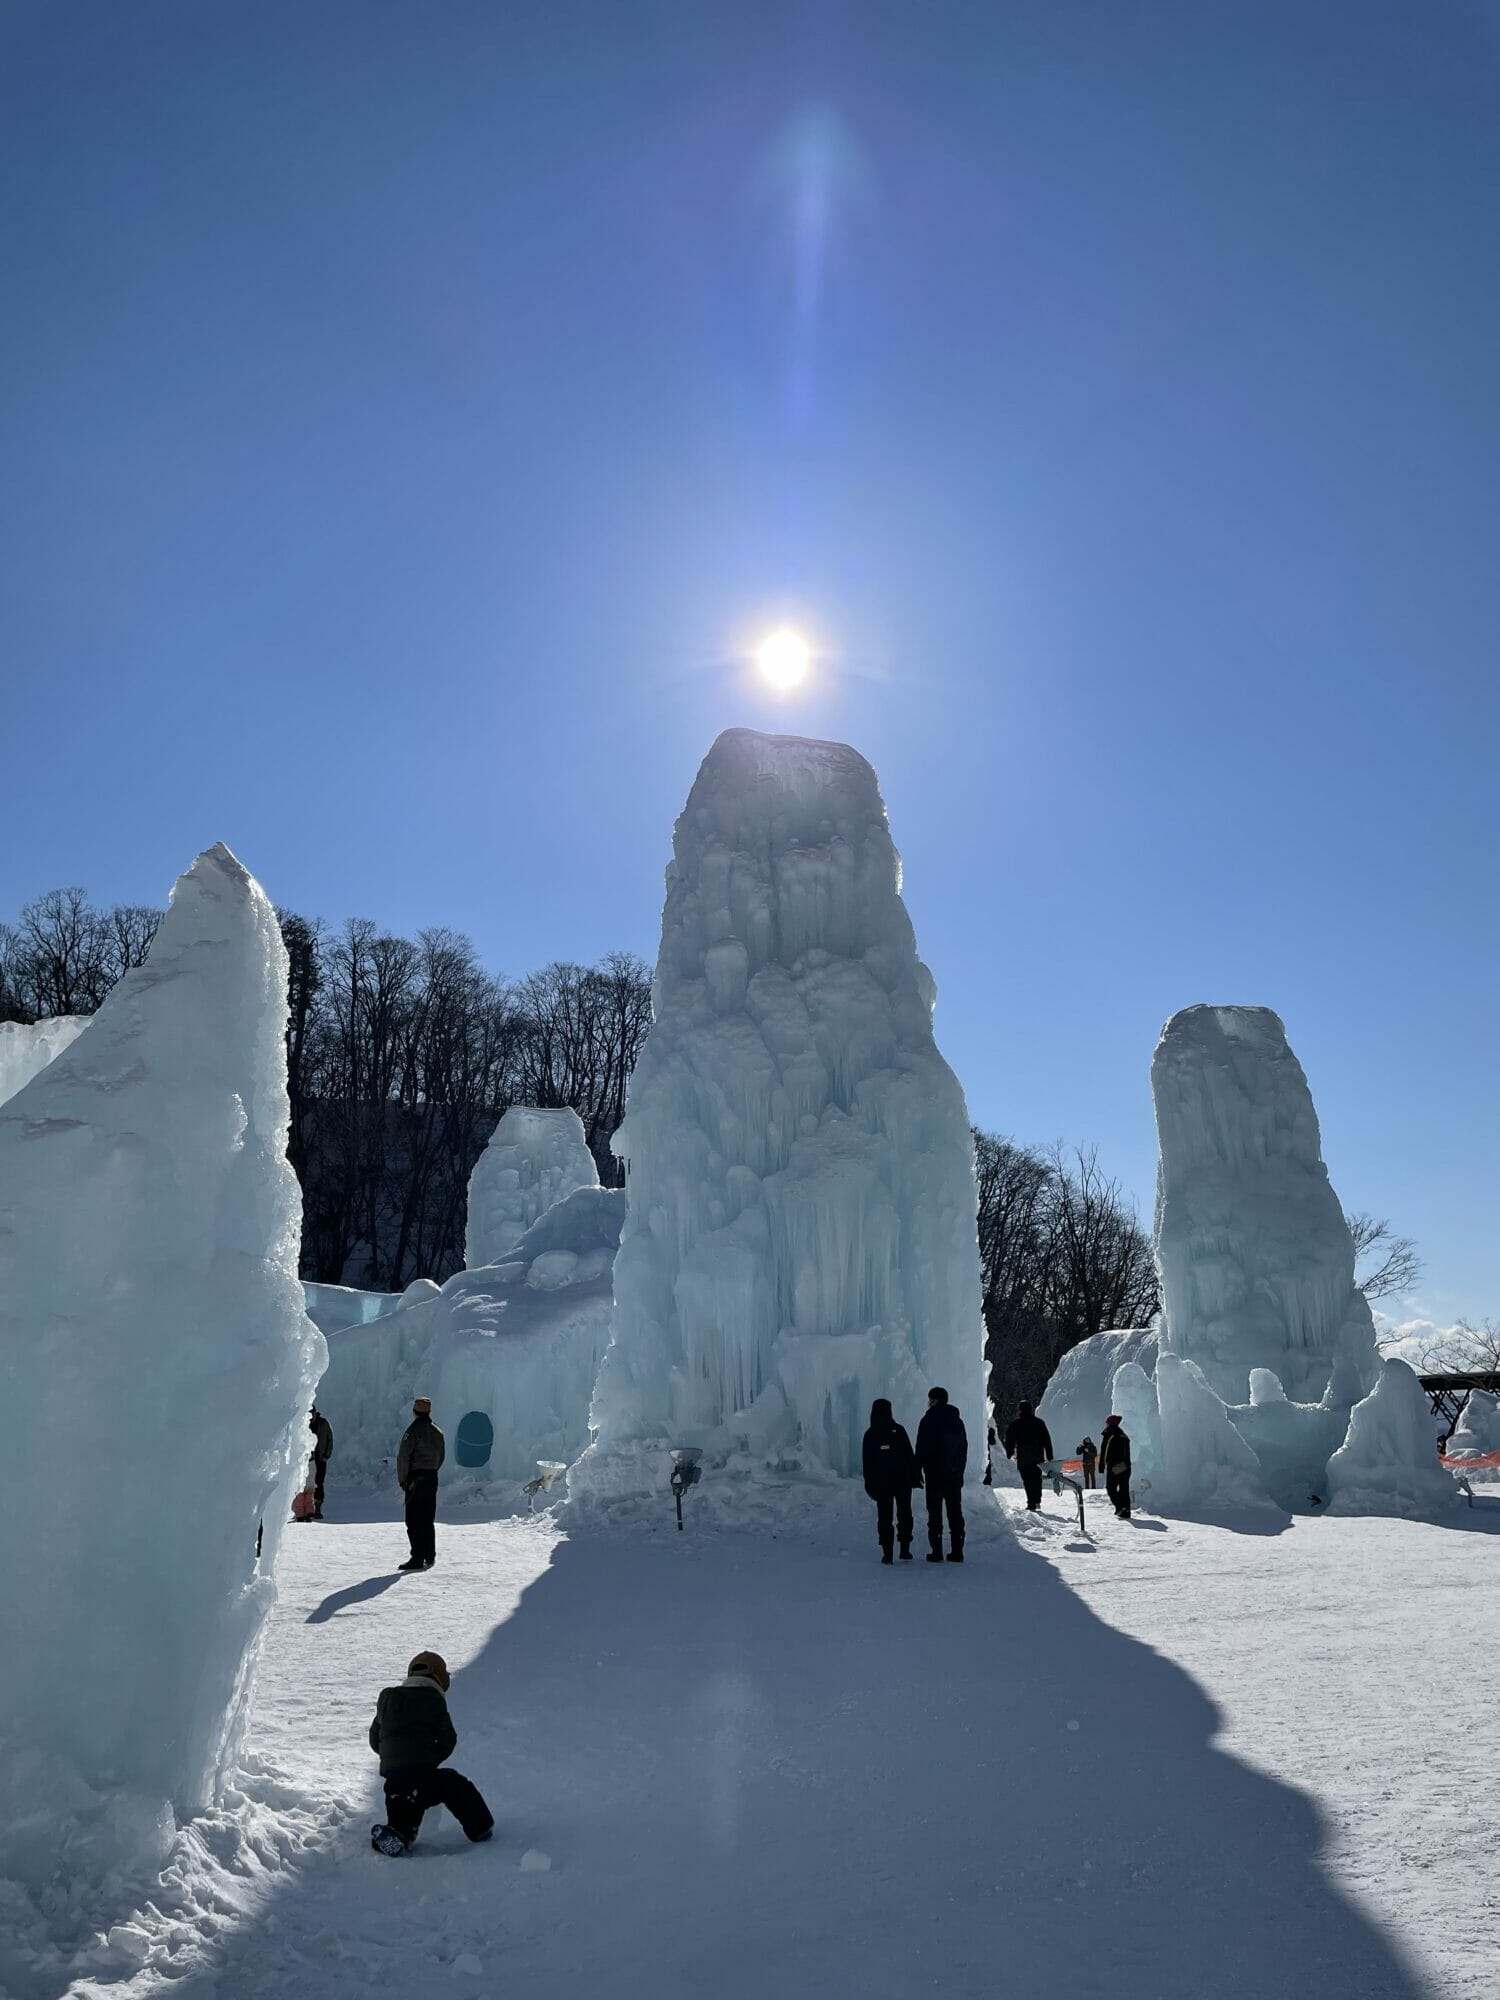 [Trip] 北海道・新千歳空港から30分、支笏湖 氷濤(ひょうとう)祭り 氷の美術館に行ってきました [2022/02/11] ID37954